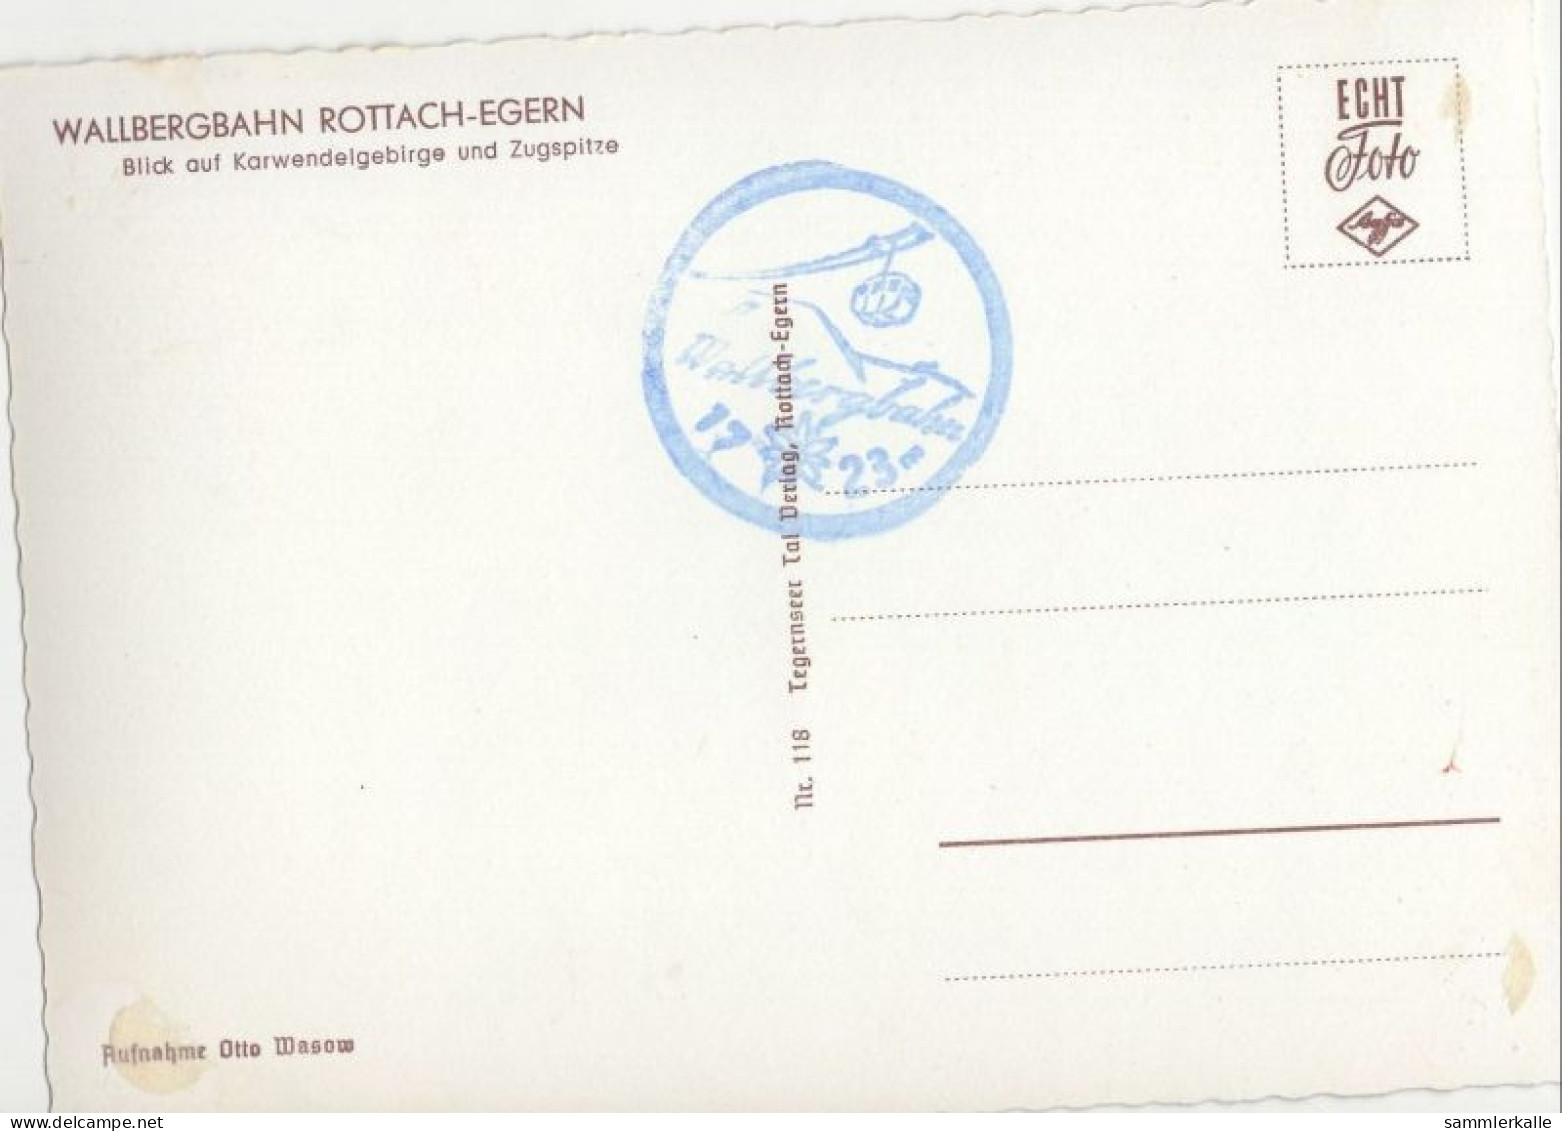 124592 - Rottach-Egern - Wallbergbahn - Blick Auf Karwendelgebirge - Miesbach